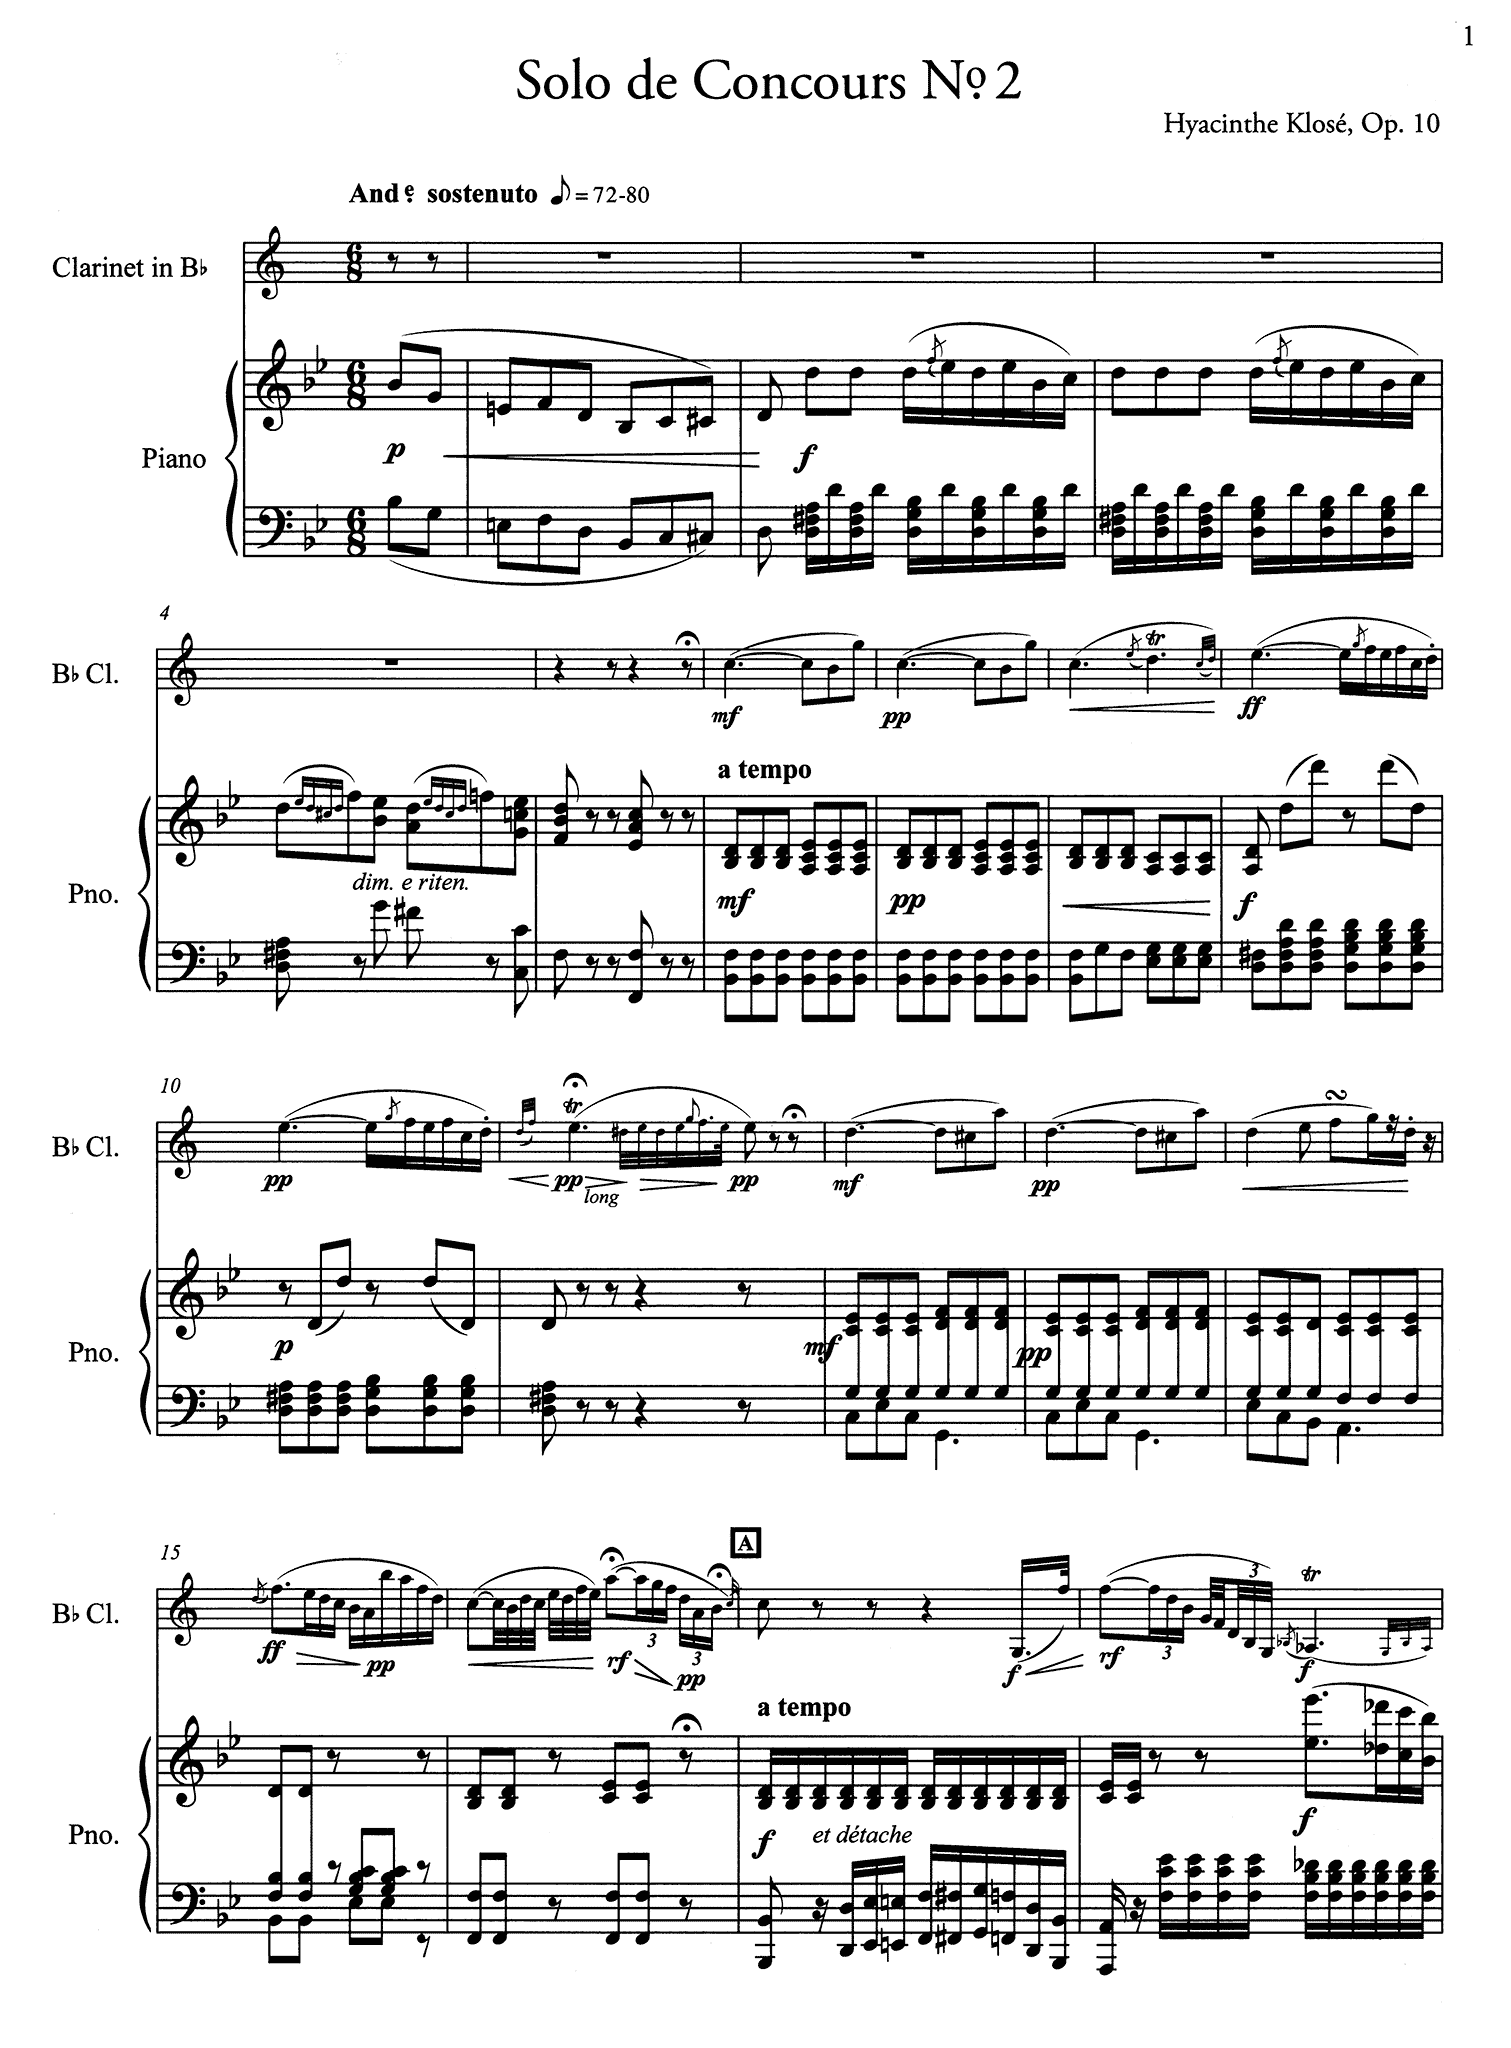 Klosé Solo de concours No. 2, Op. 10 clarinet and piano score